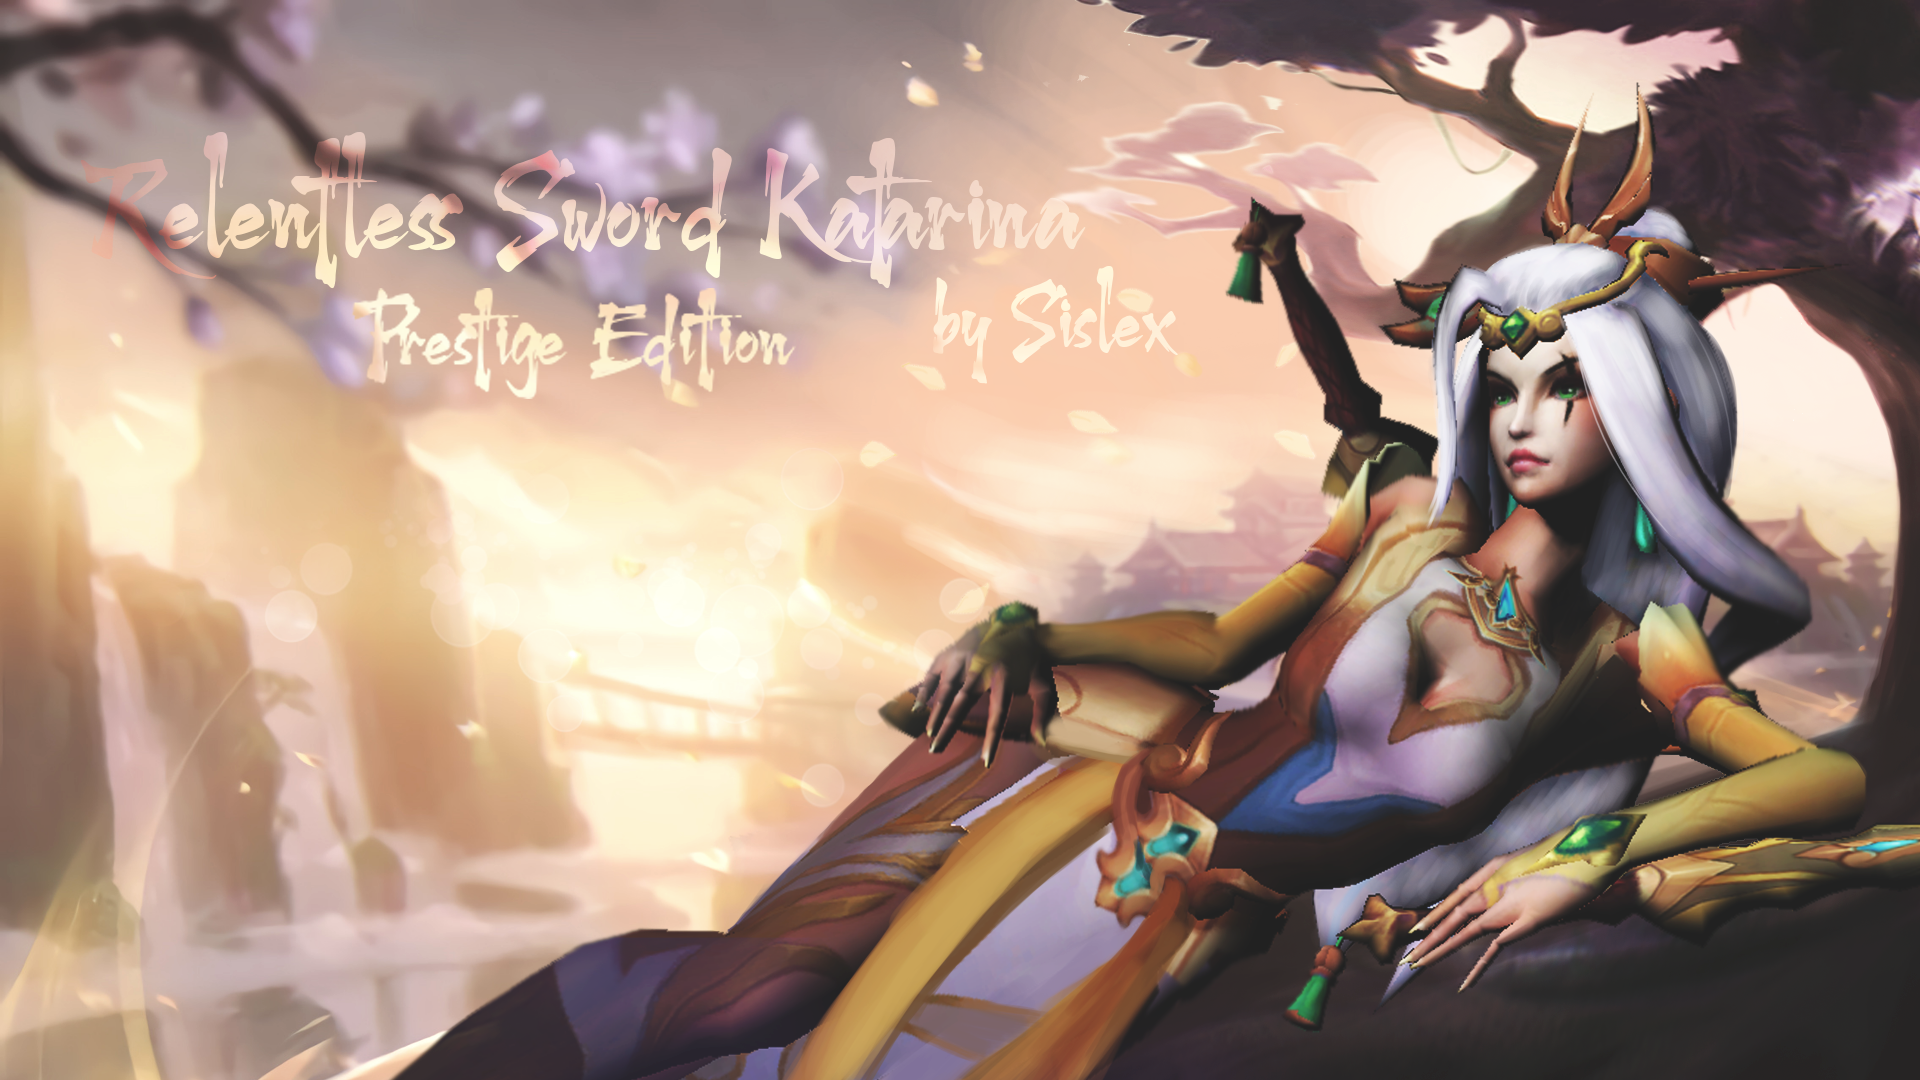 Relentless Sword Katarina Prestige Edition